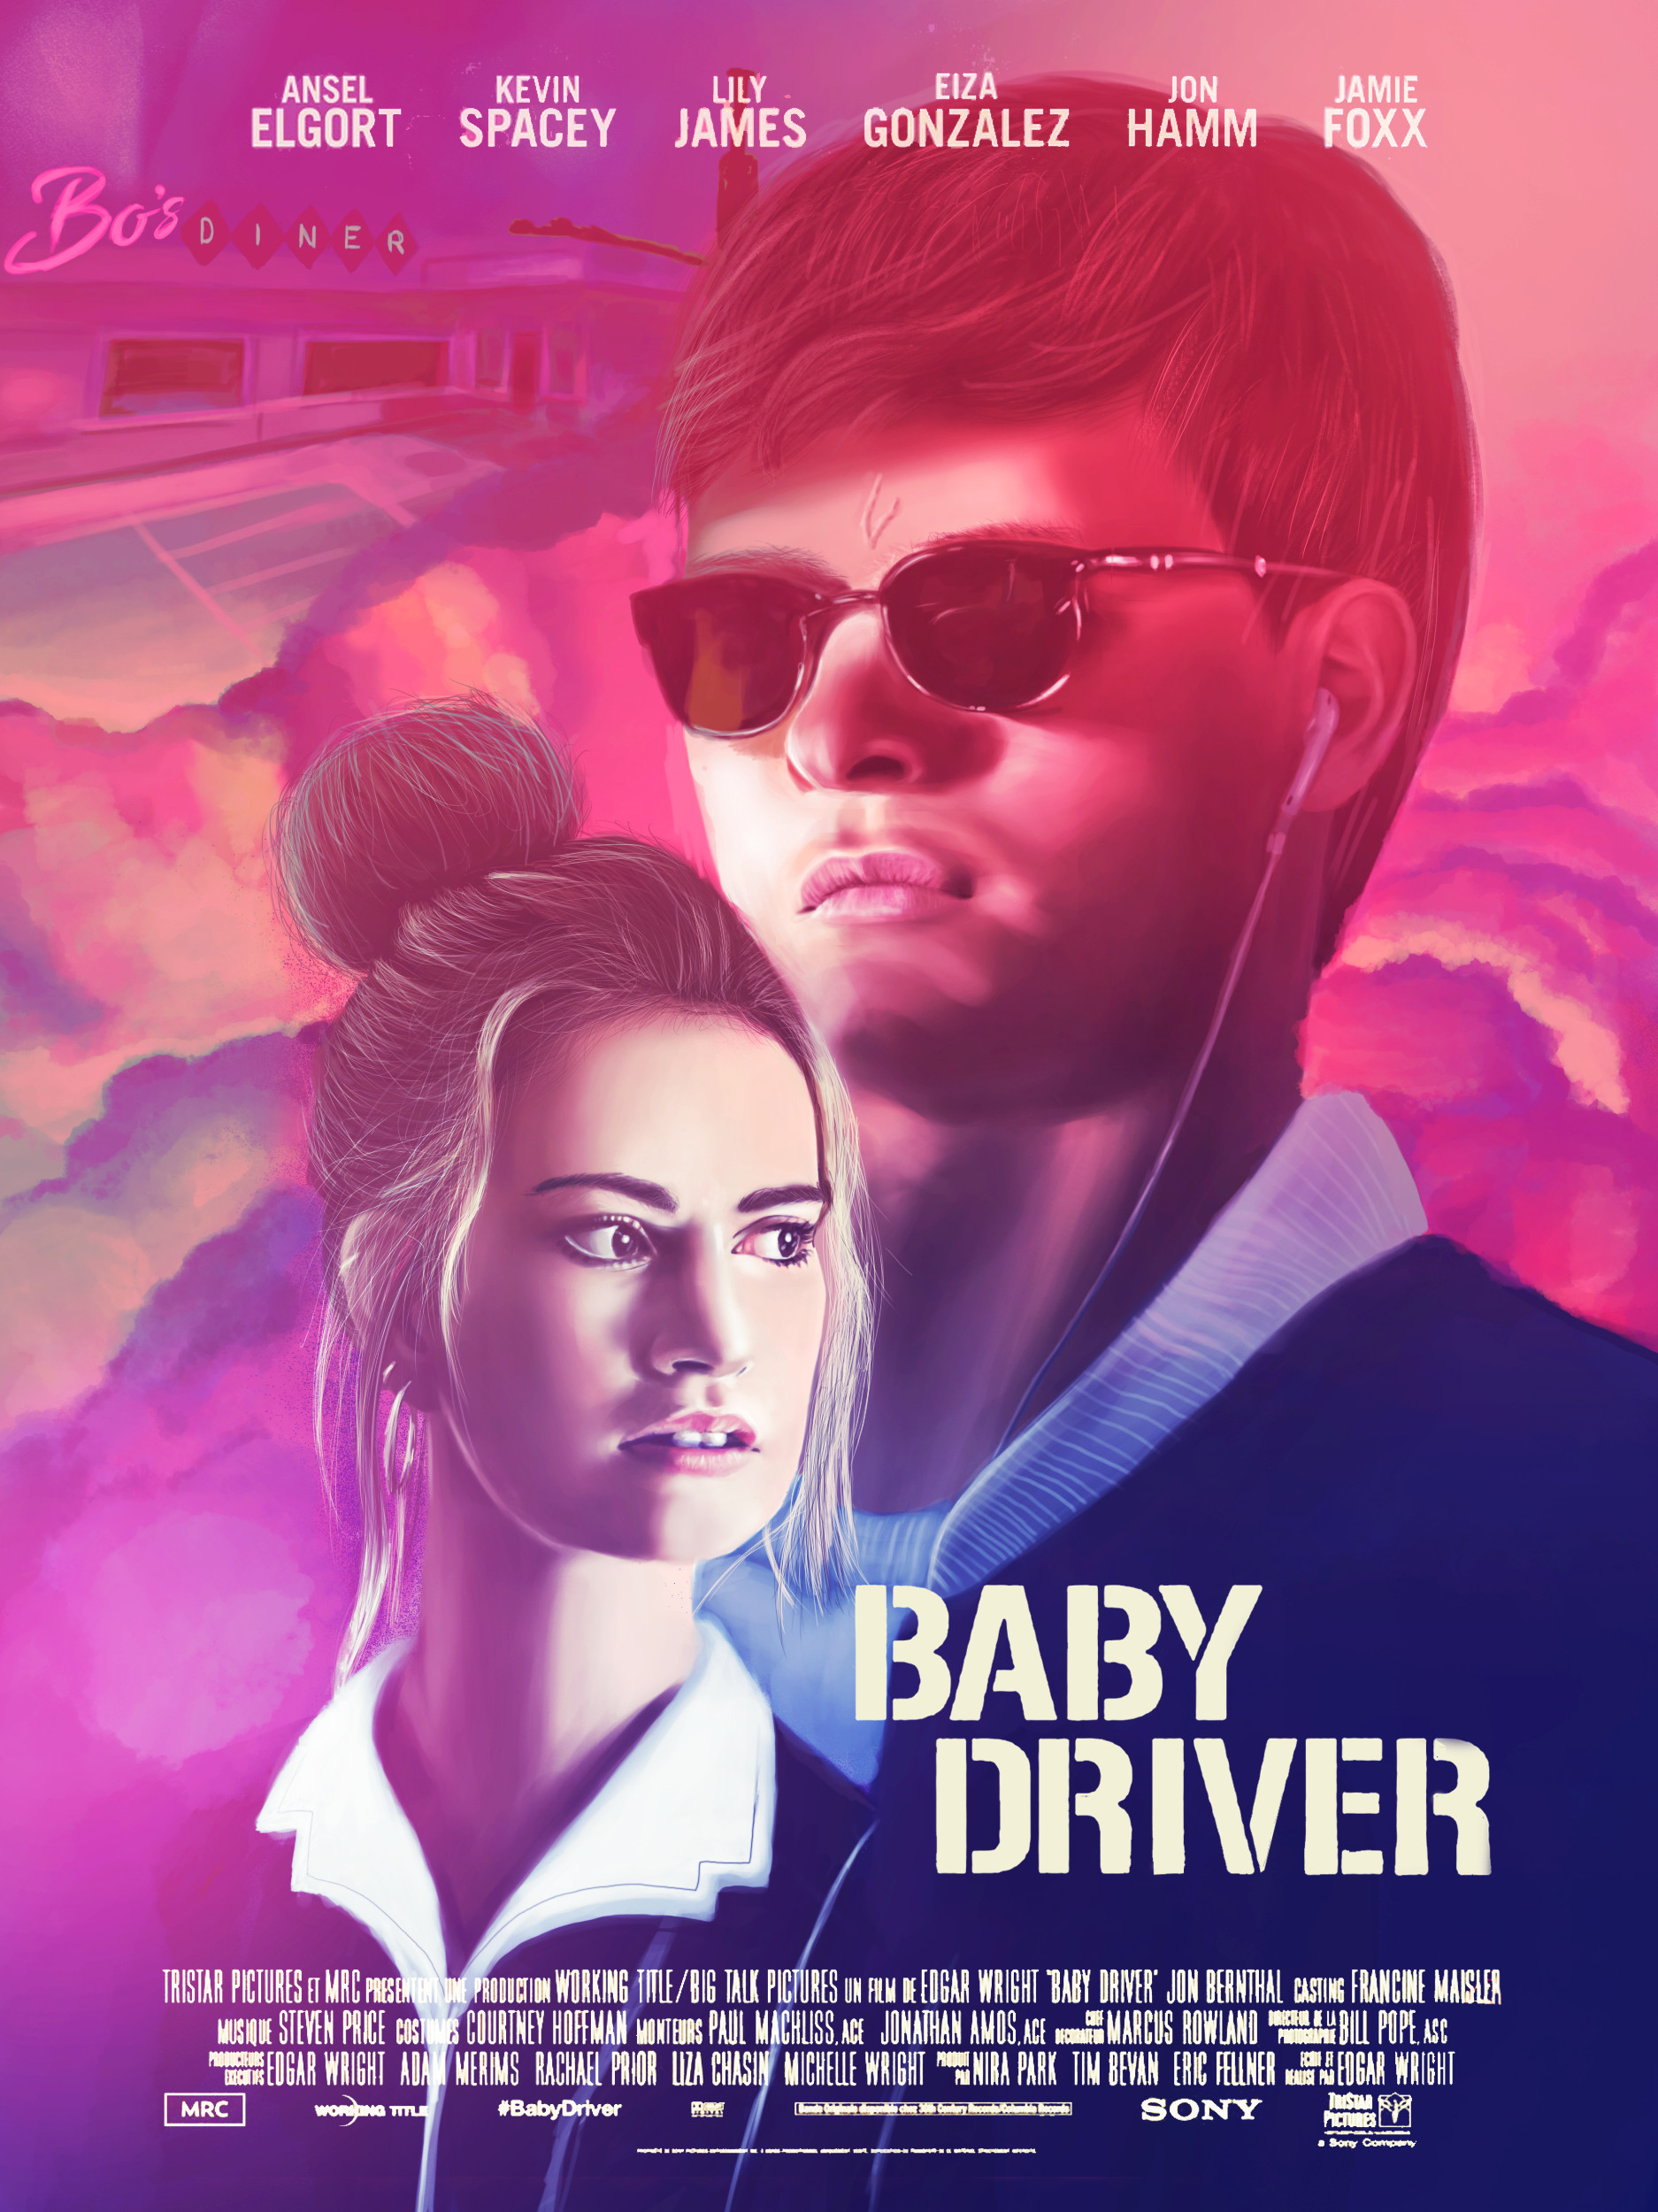 Caroline Vermeir - Baby Driver  digital painting & alternate poster